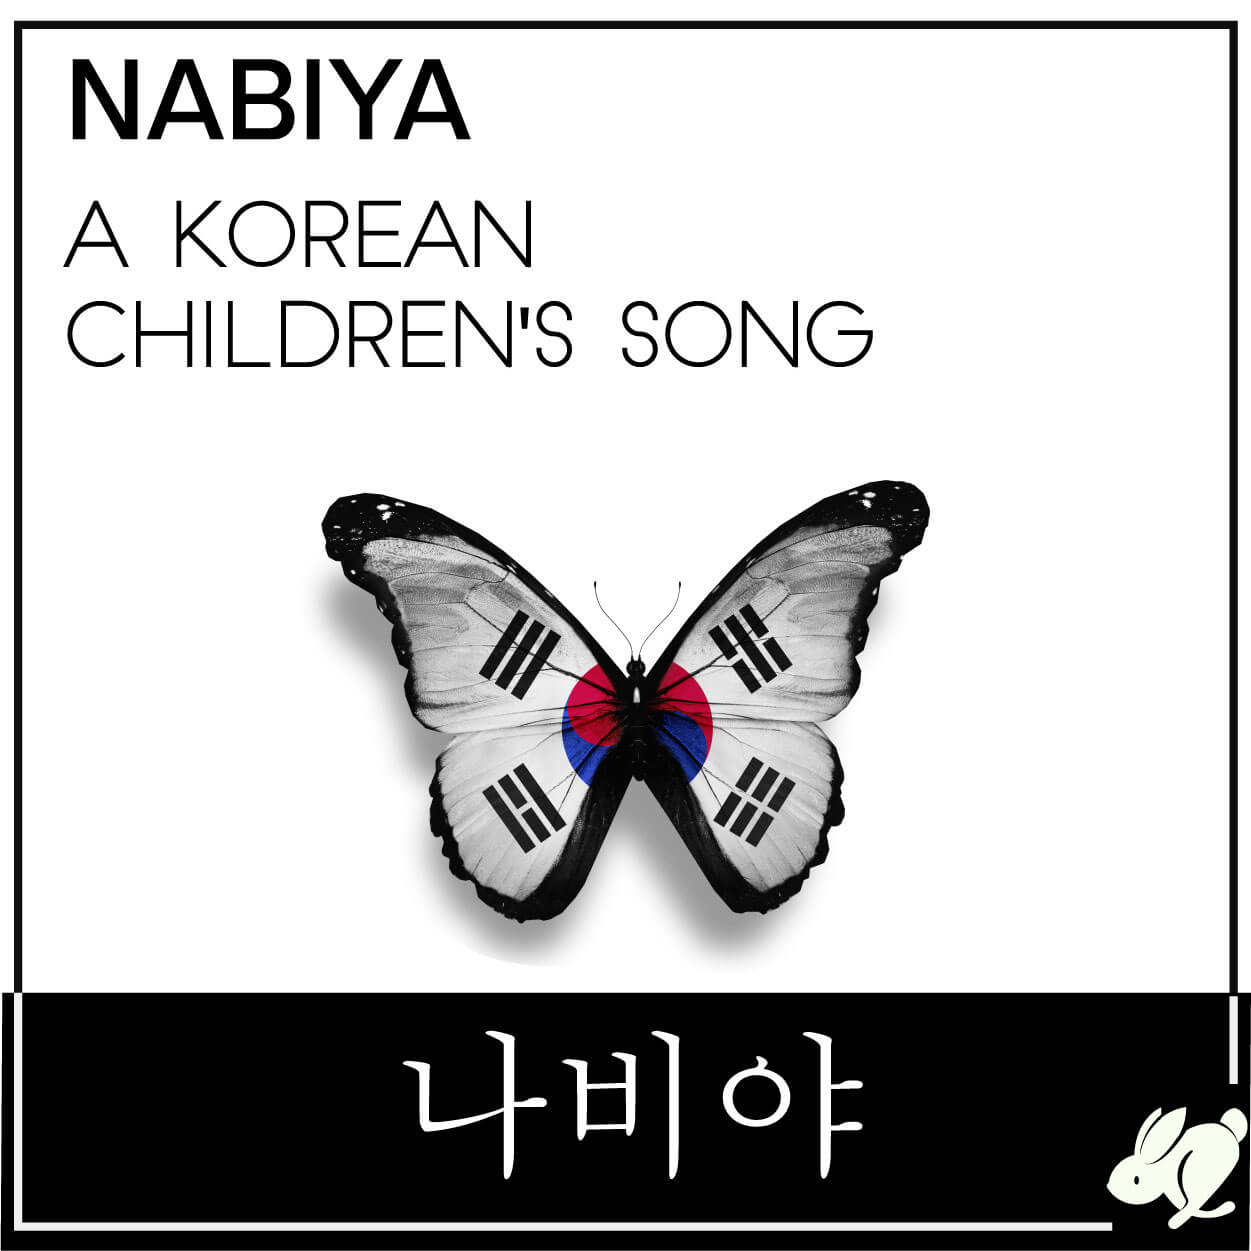 Nabiya: A Charming Korean Folk Song For Spring